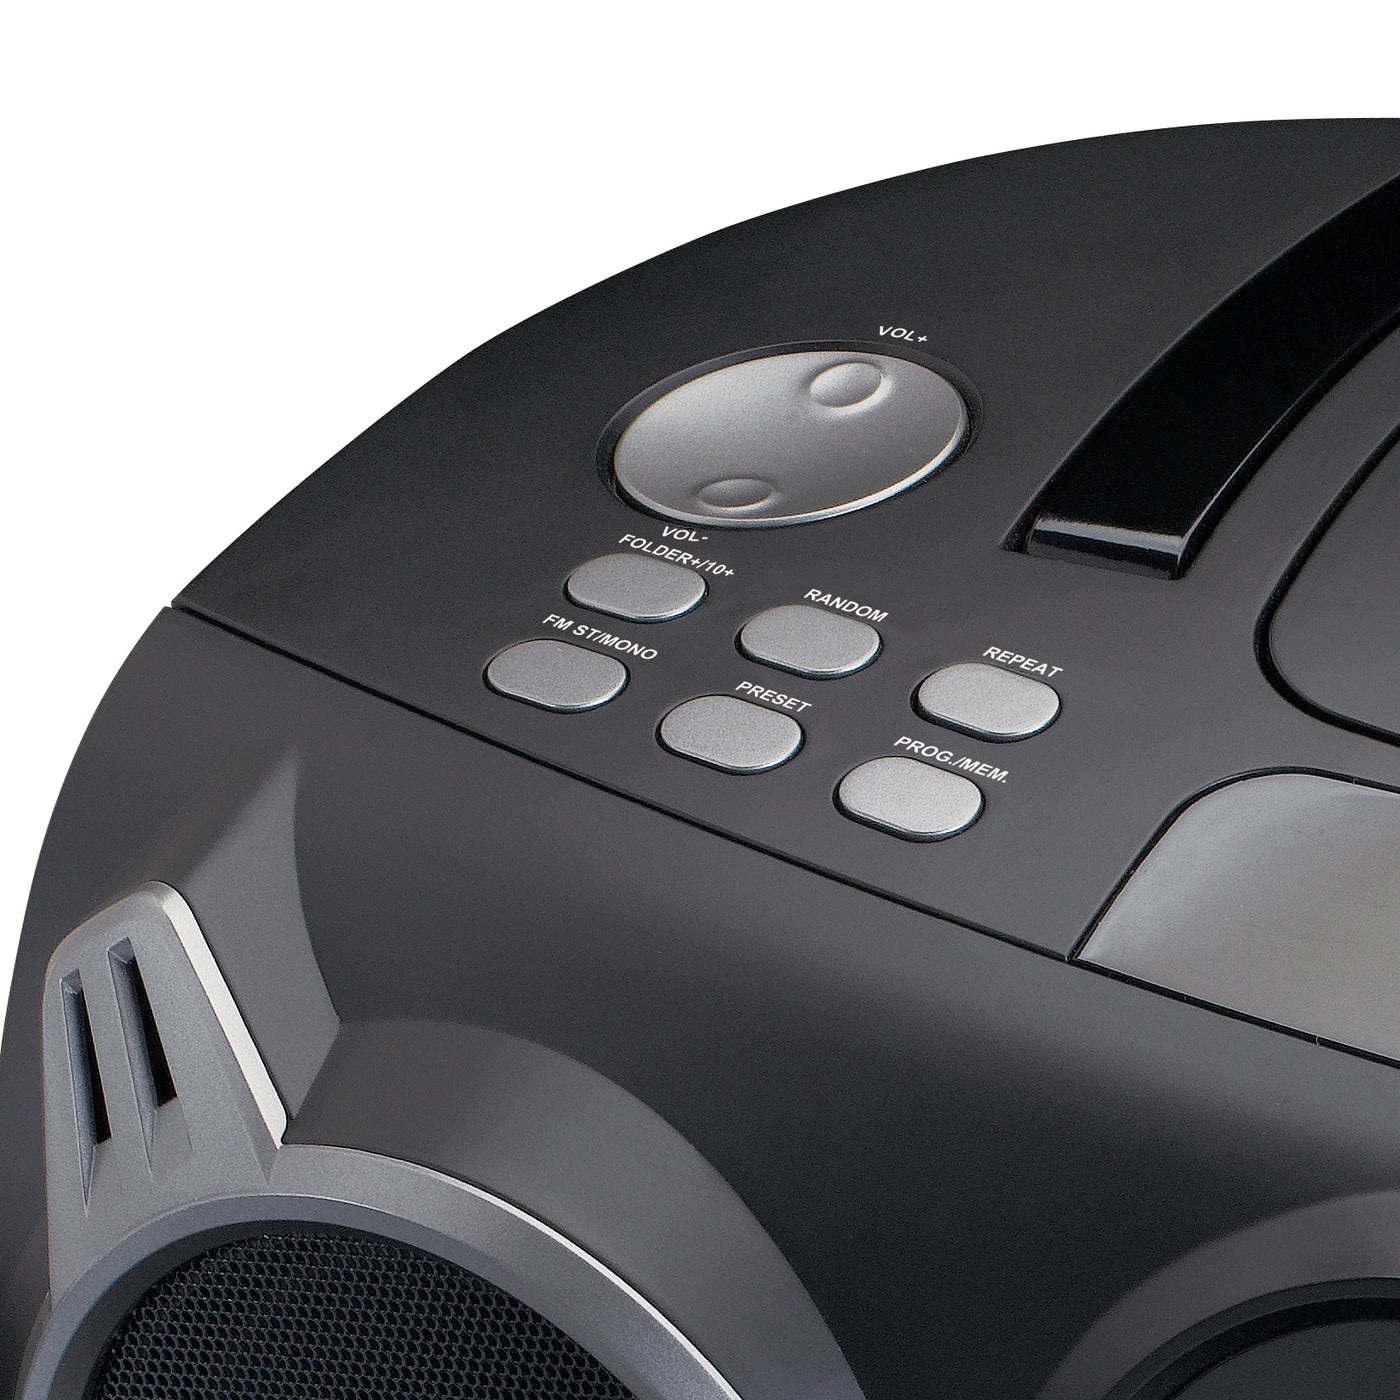 LENCO SCD-100BK - Draagbare PLL FM Radio CD-speler Inclusief Bluetooth®/USB en SD speler - Zwart